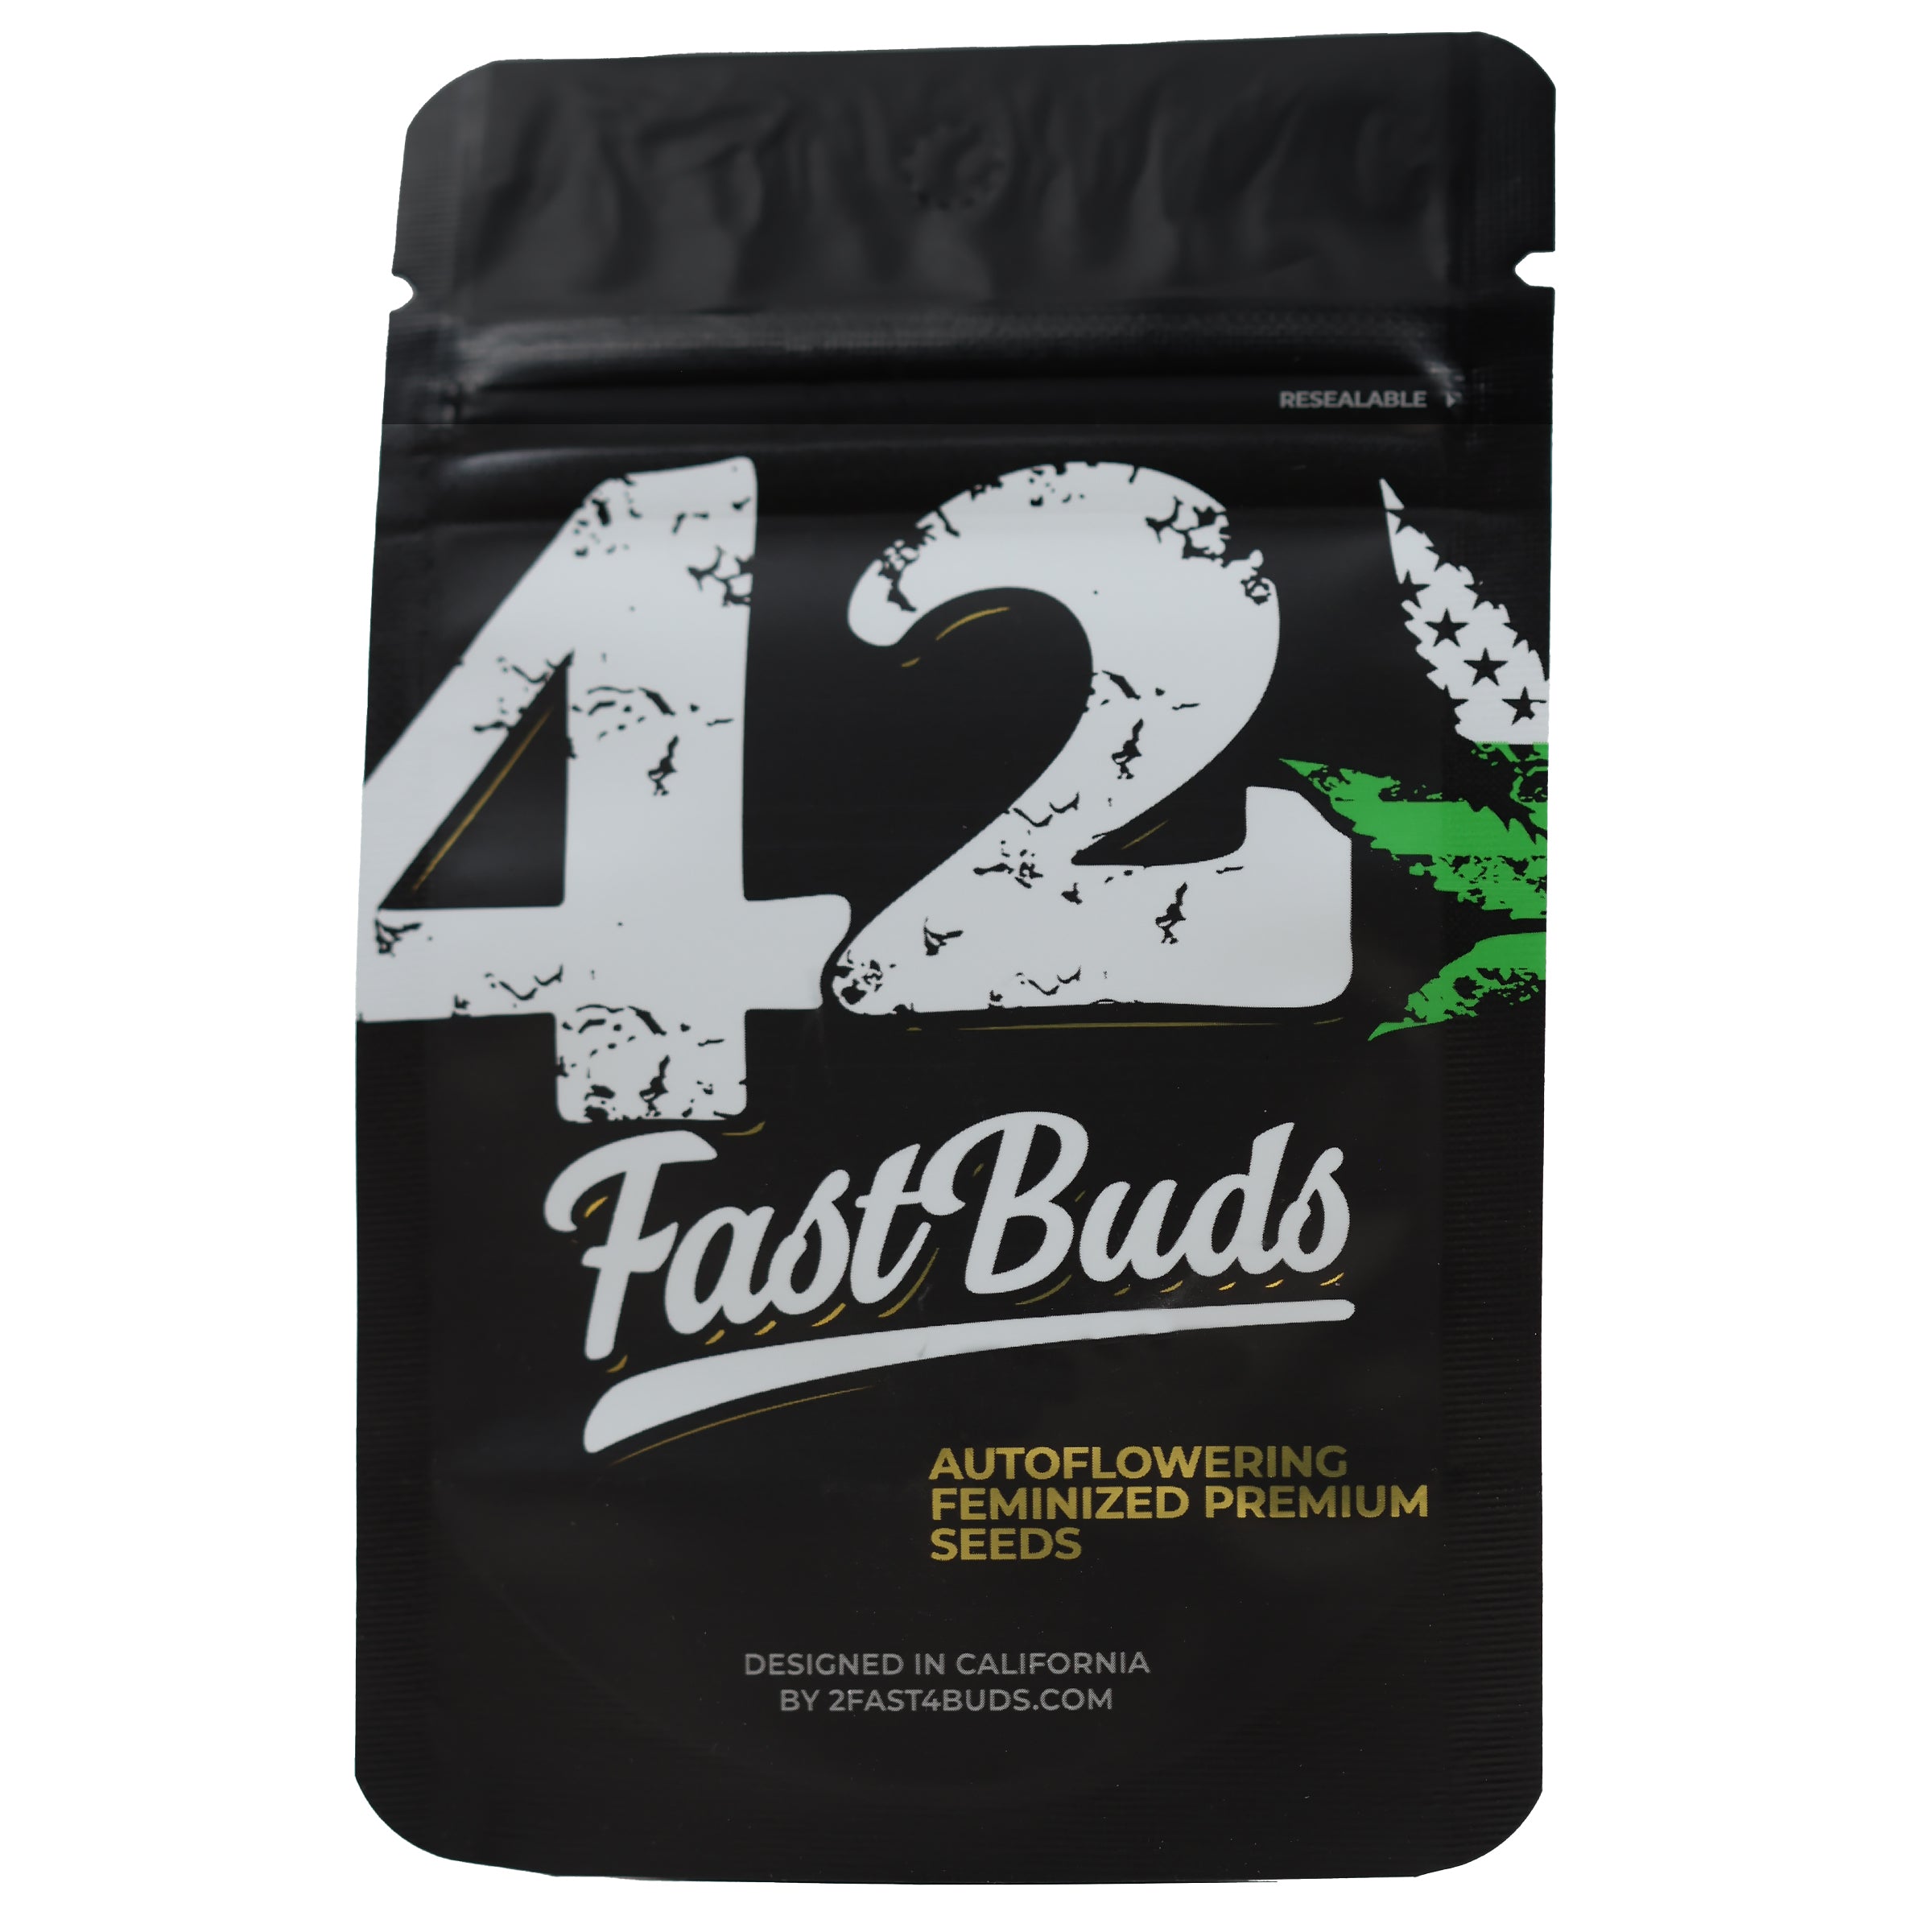 G14 Auto (FastBuds Seeds) Autoflowering Seeds